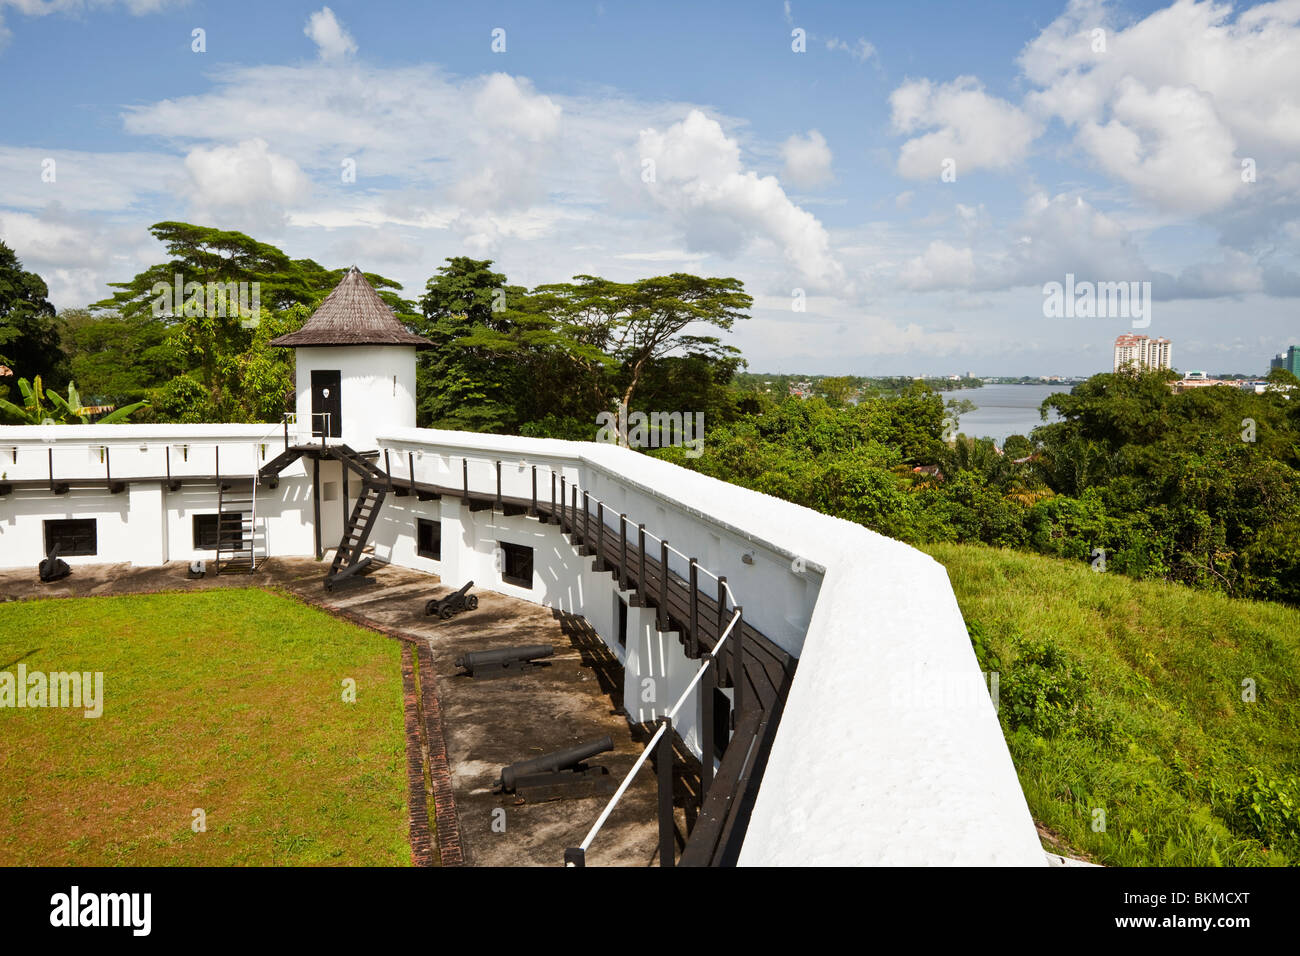 Fort Margherita - built by Charles Brooke in 1879, overlooking the city skyline. Kuching, Sarawak, Borneo, Malaysia. Stock Photo